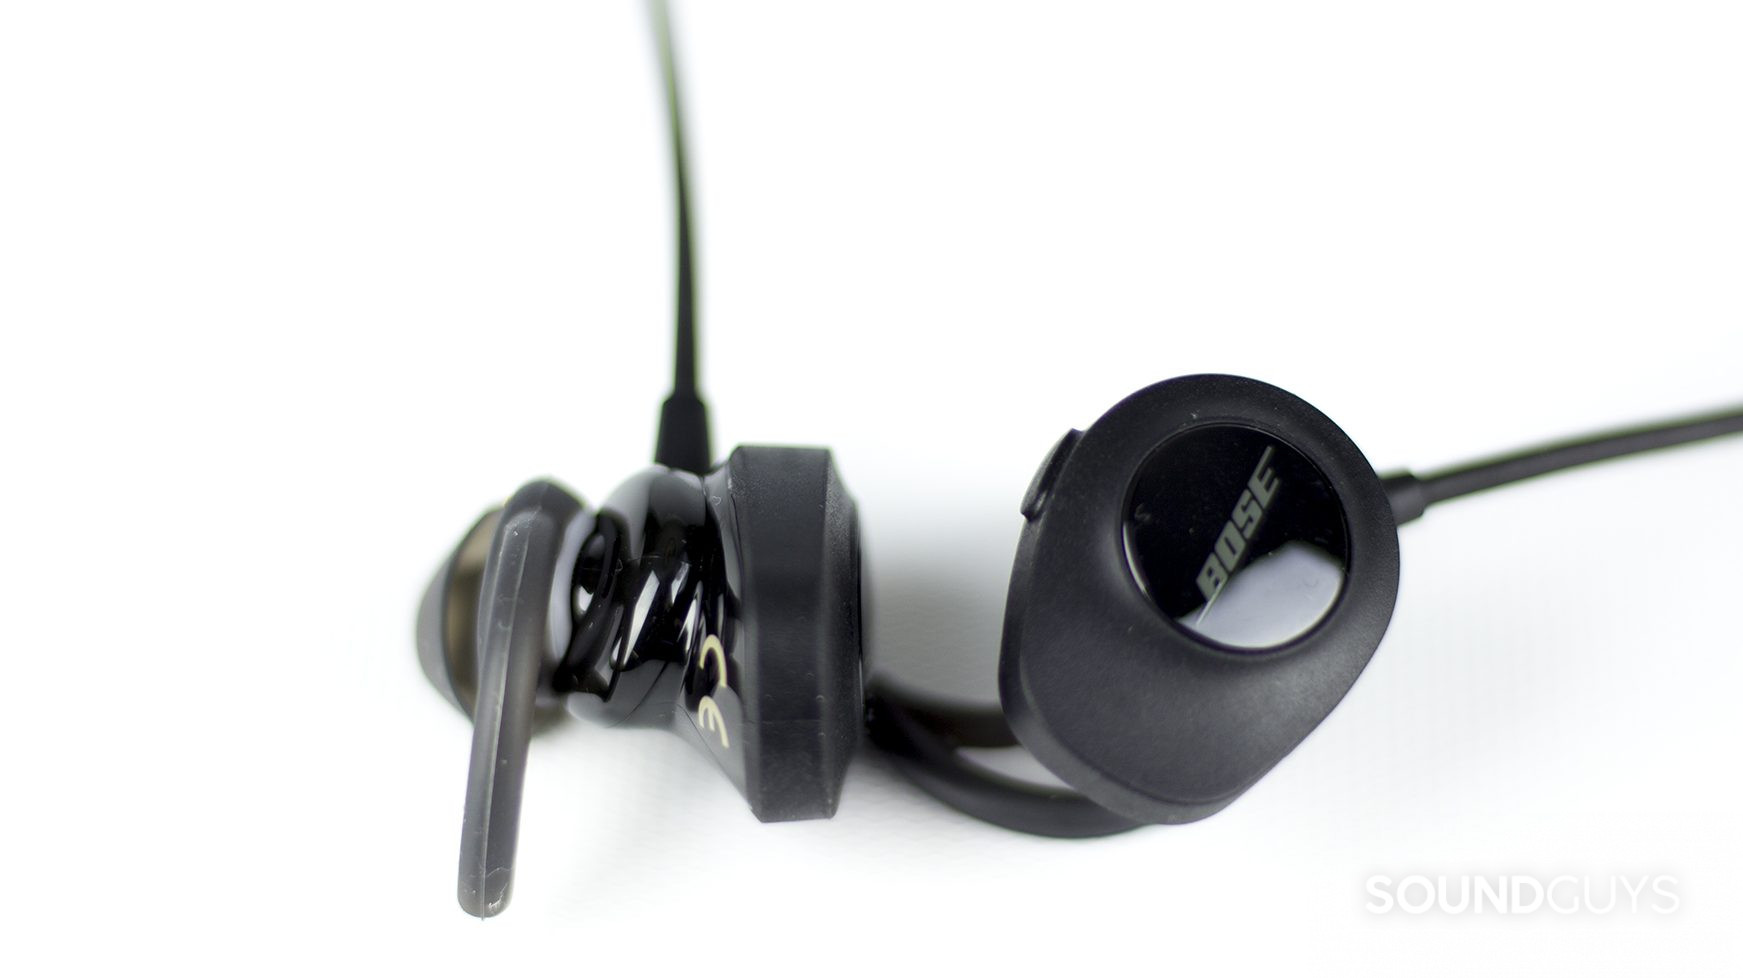 Bose SoundSport Wireless Headphones – Adventure Ferg